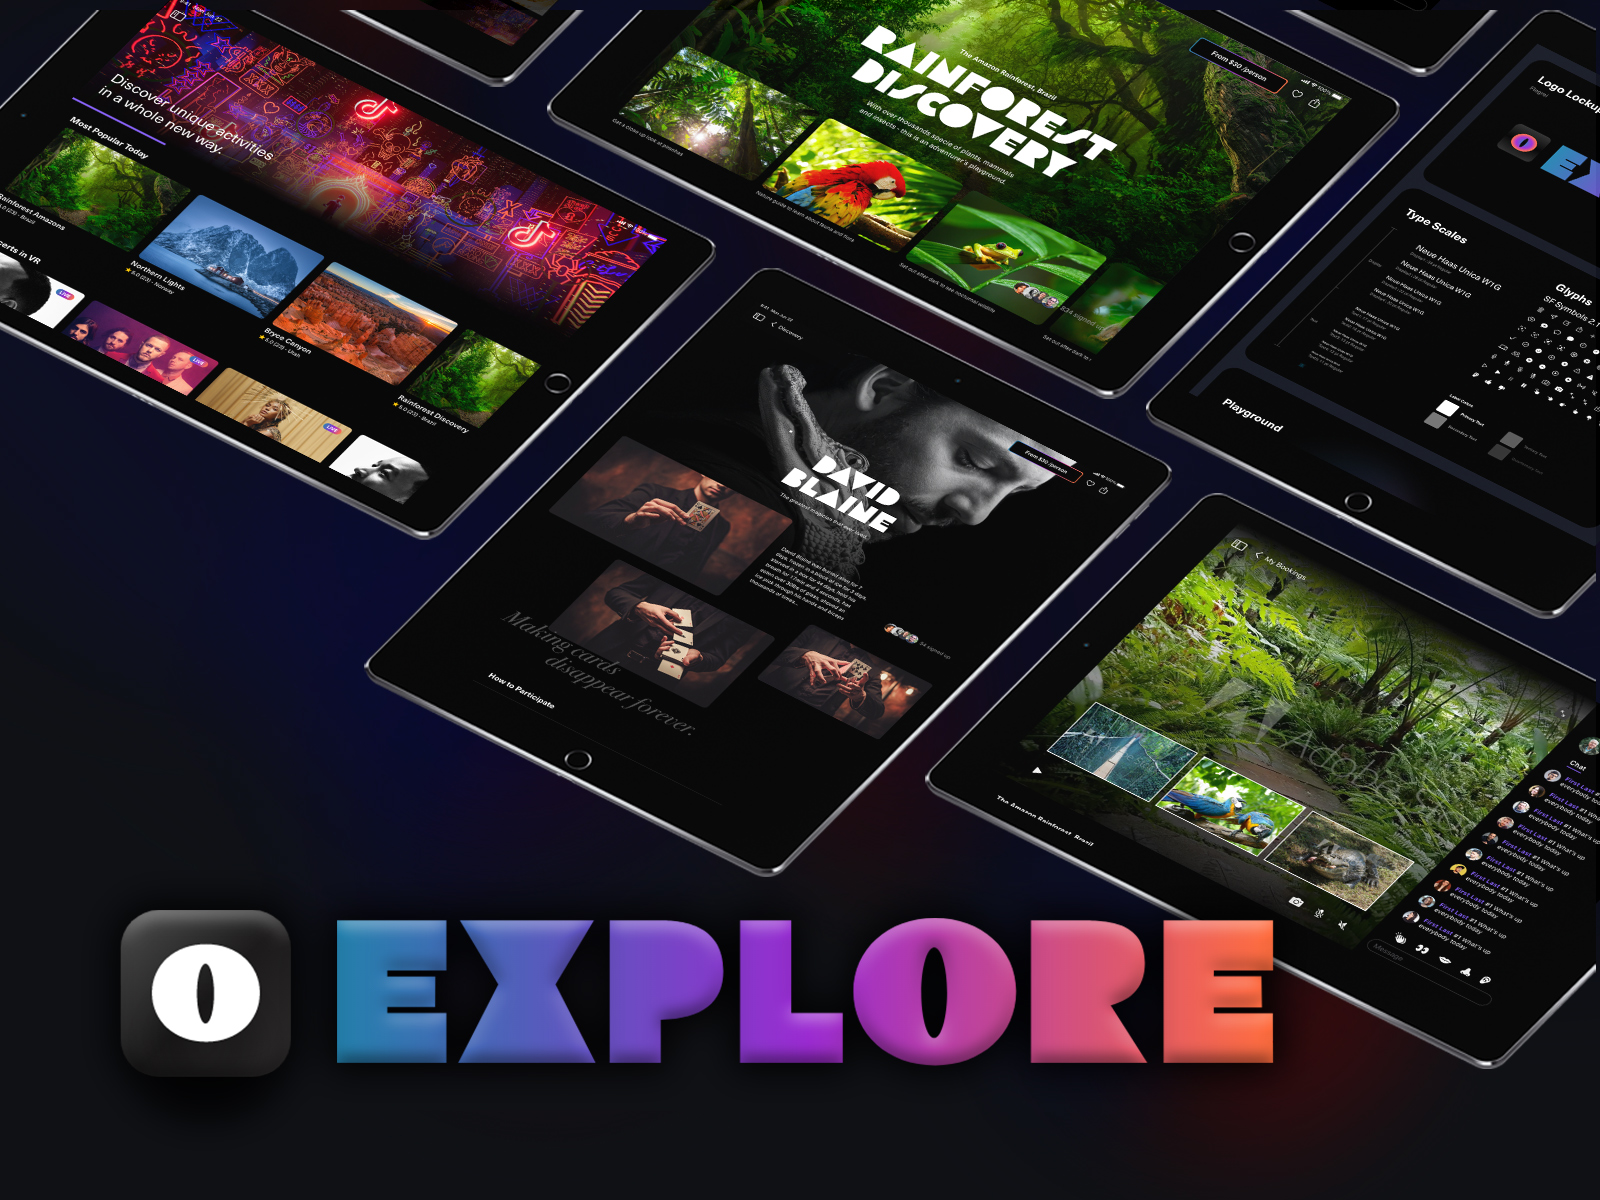 AdobeXD Live: Create digitally immersive experiences on iPad